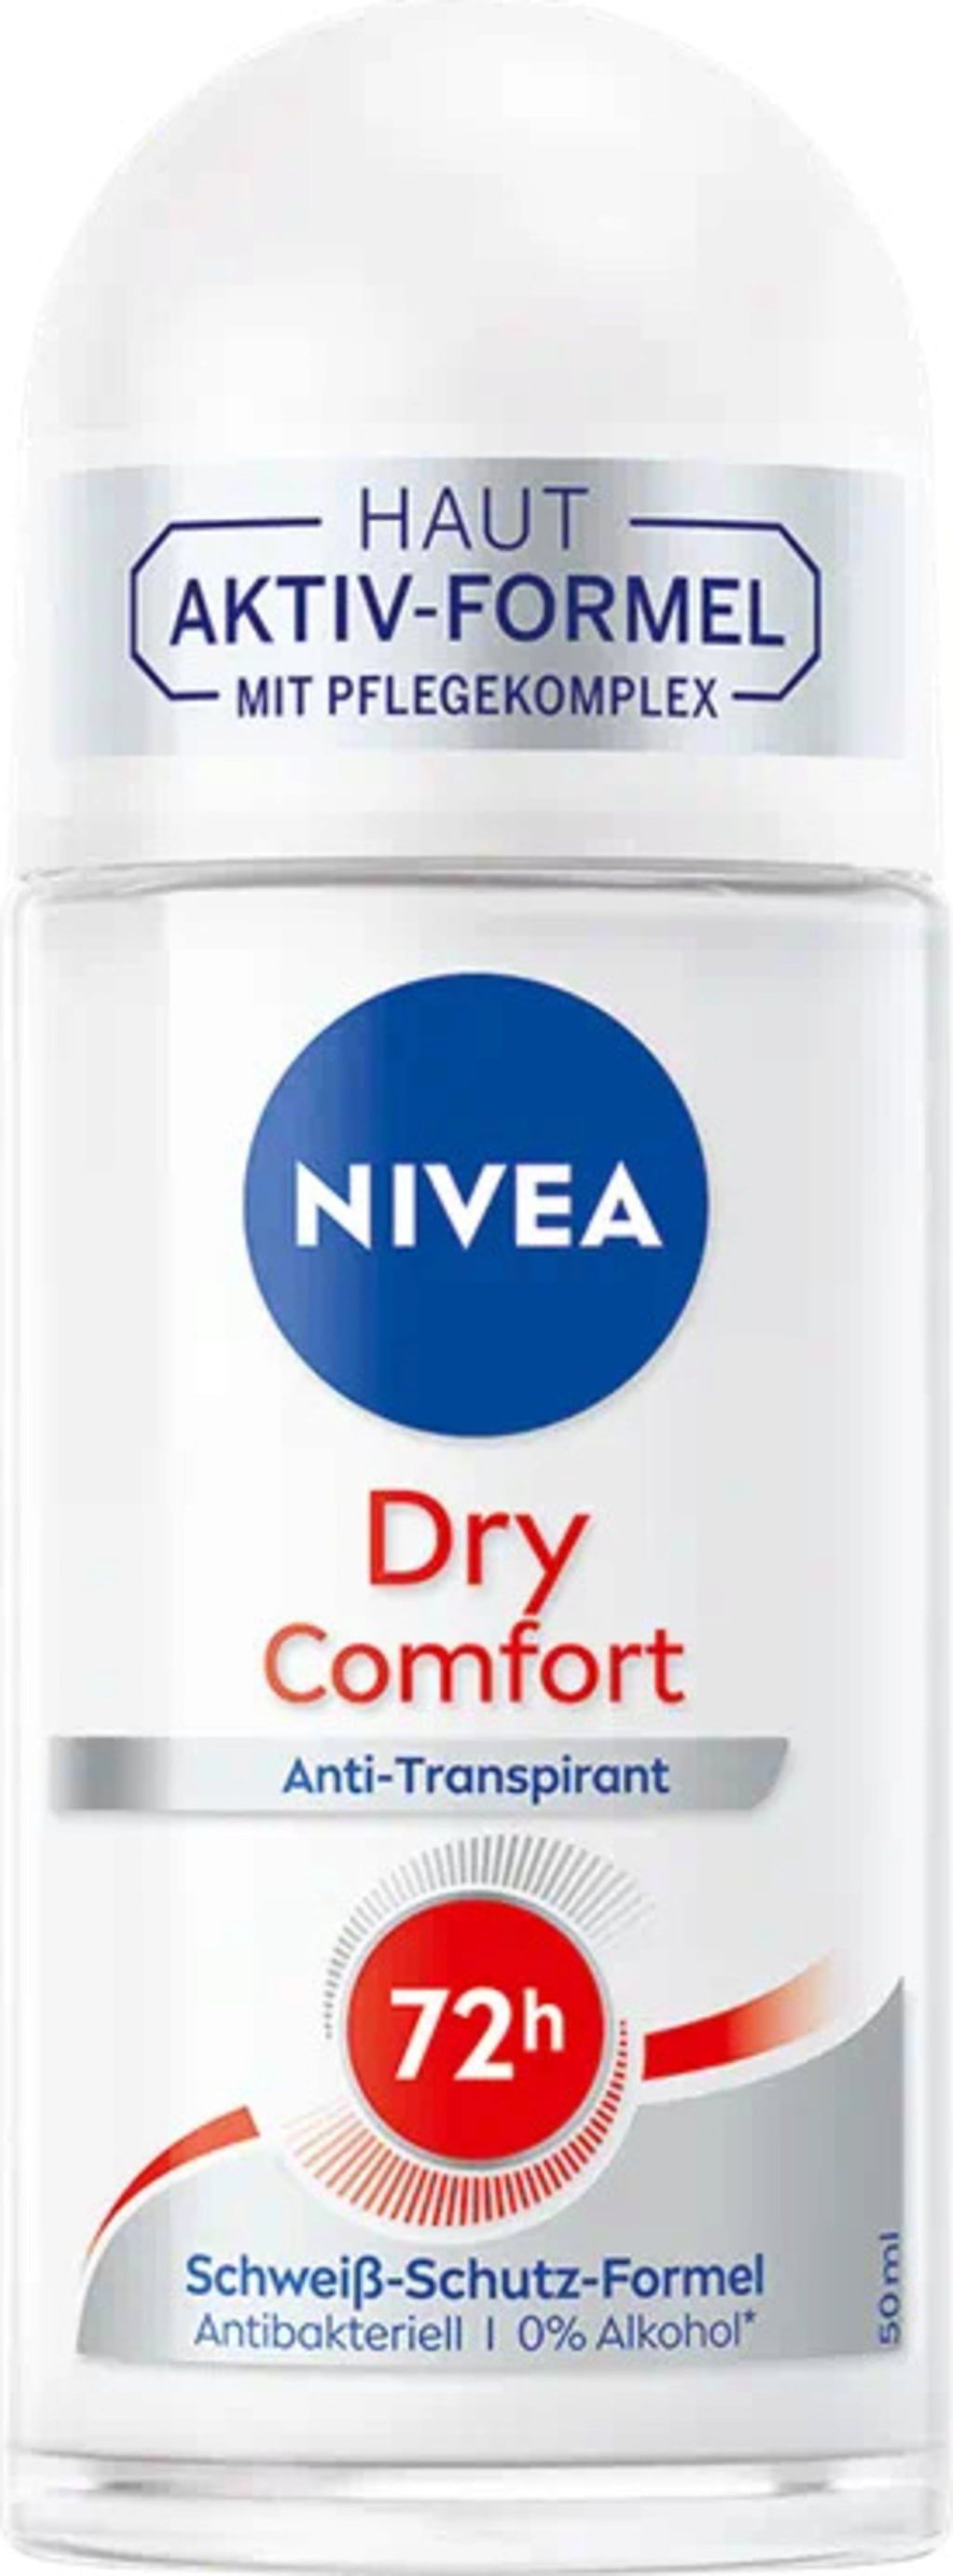 Nivea Dry Comfort Roll-on Deodorant reviews in Deodorant/Anti-perspirant -  ChickAdvisor